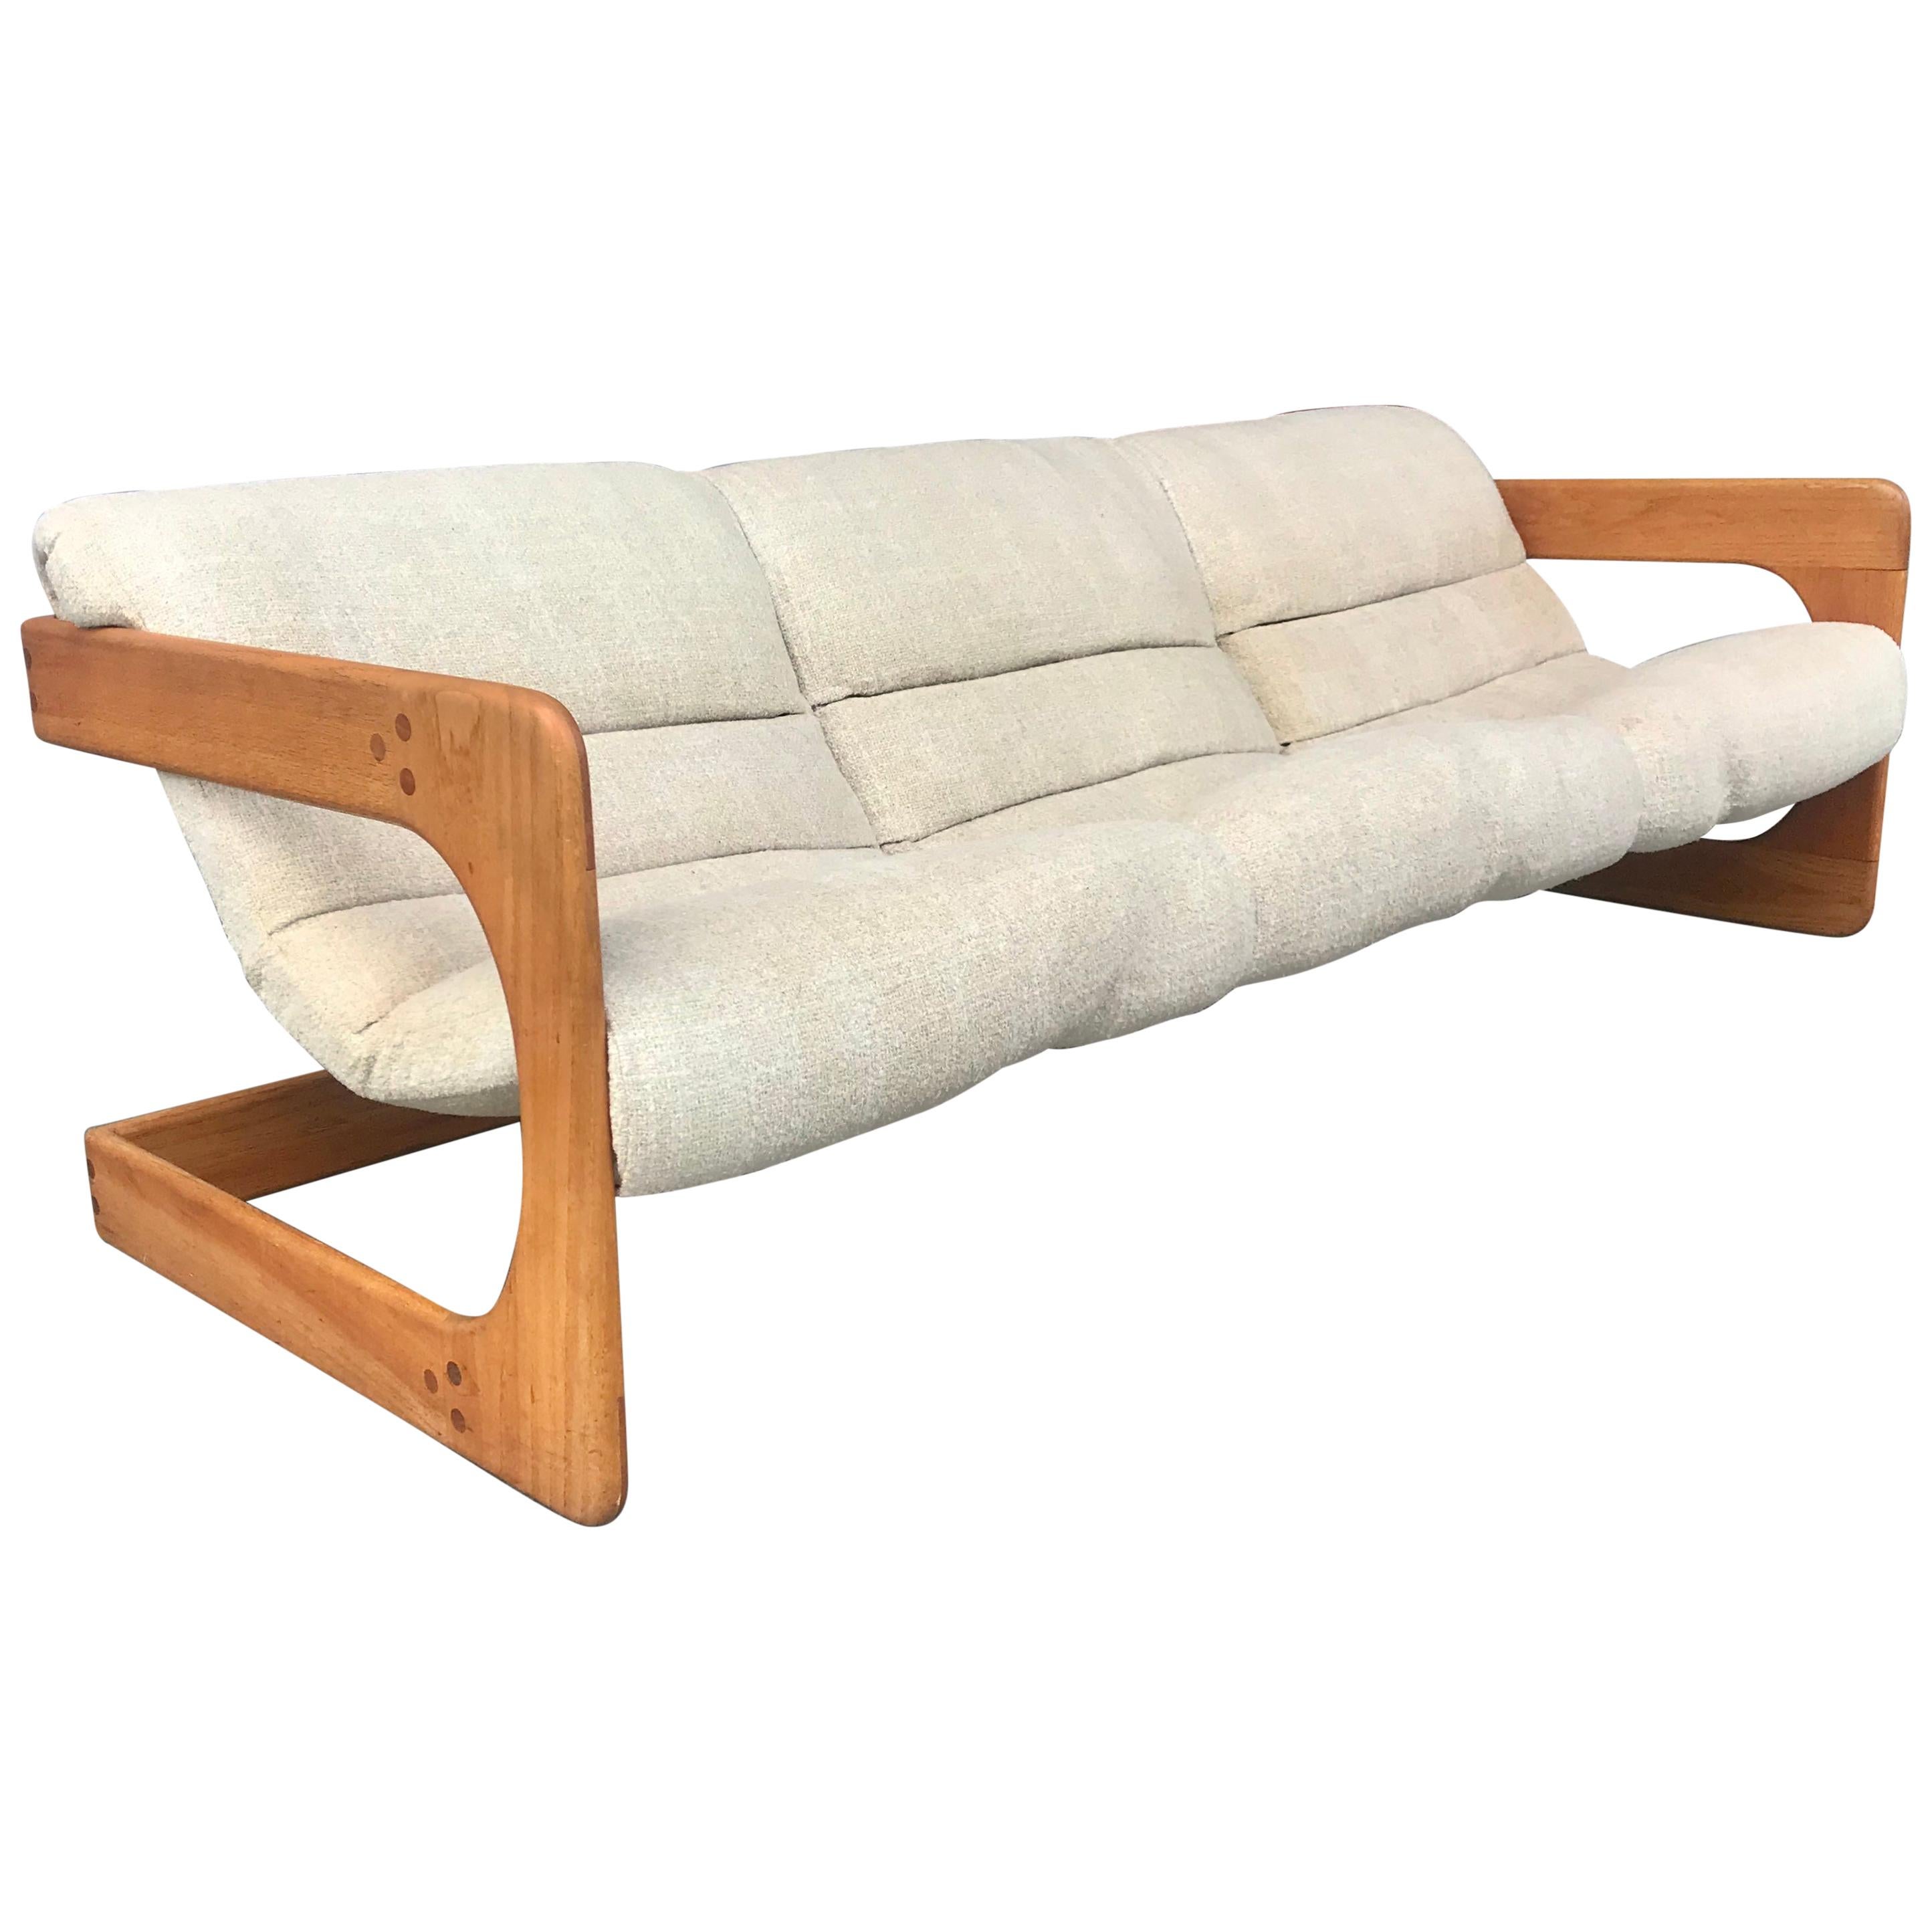 Rare 3-Seat Sofa Designed by Lou Hodges, California Design Group 1970 Modernist For Sale